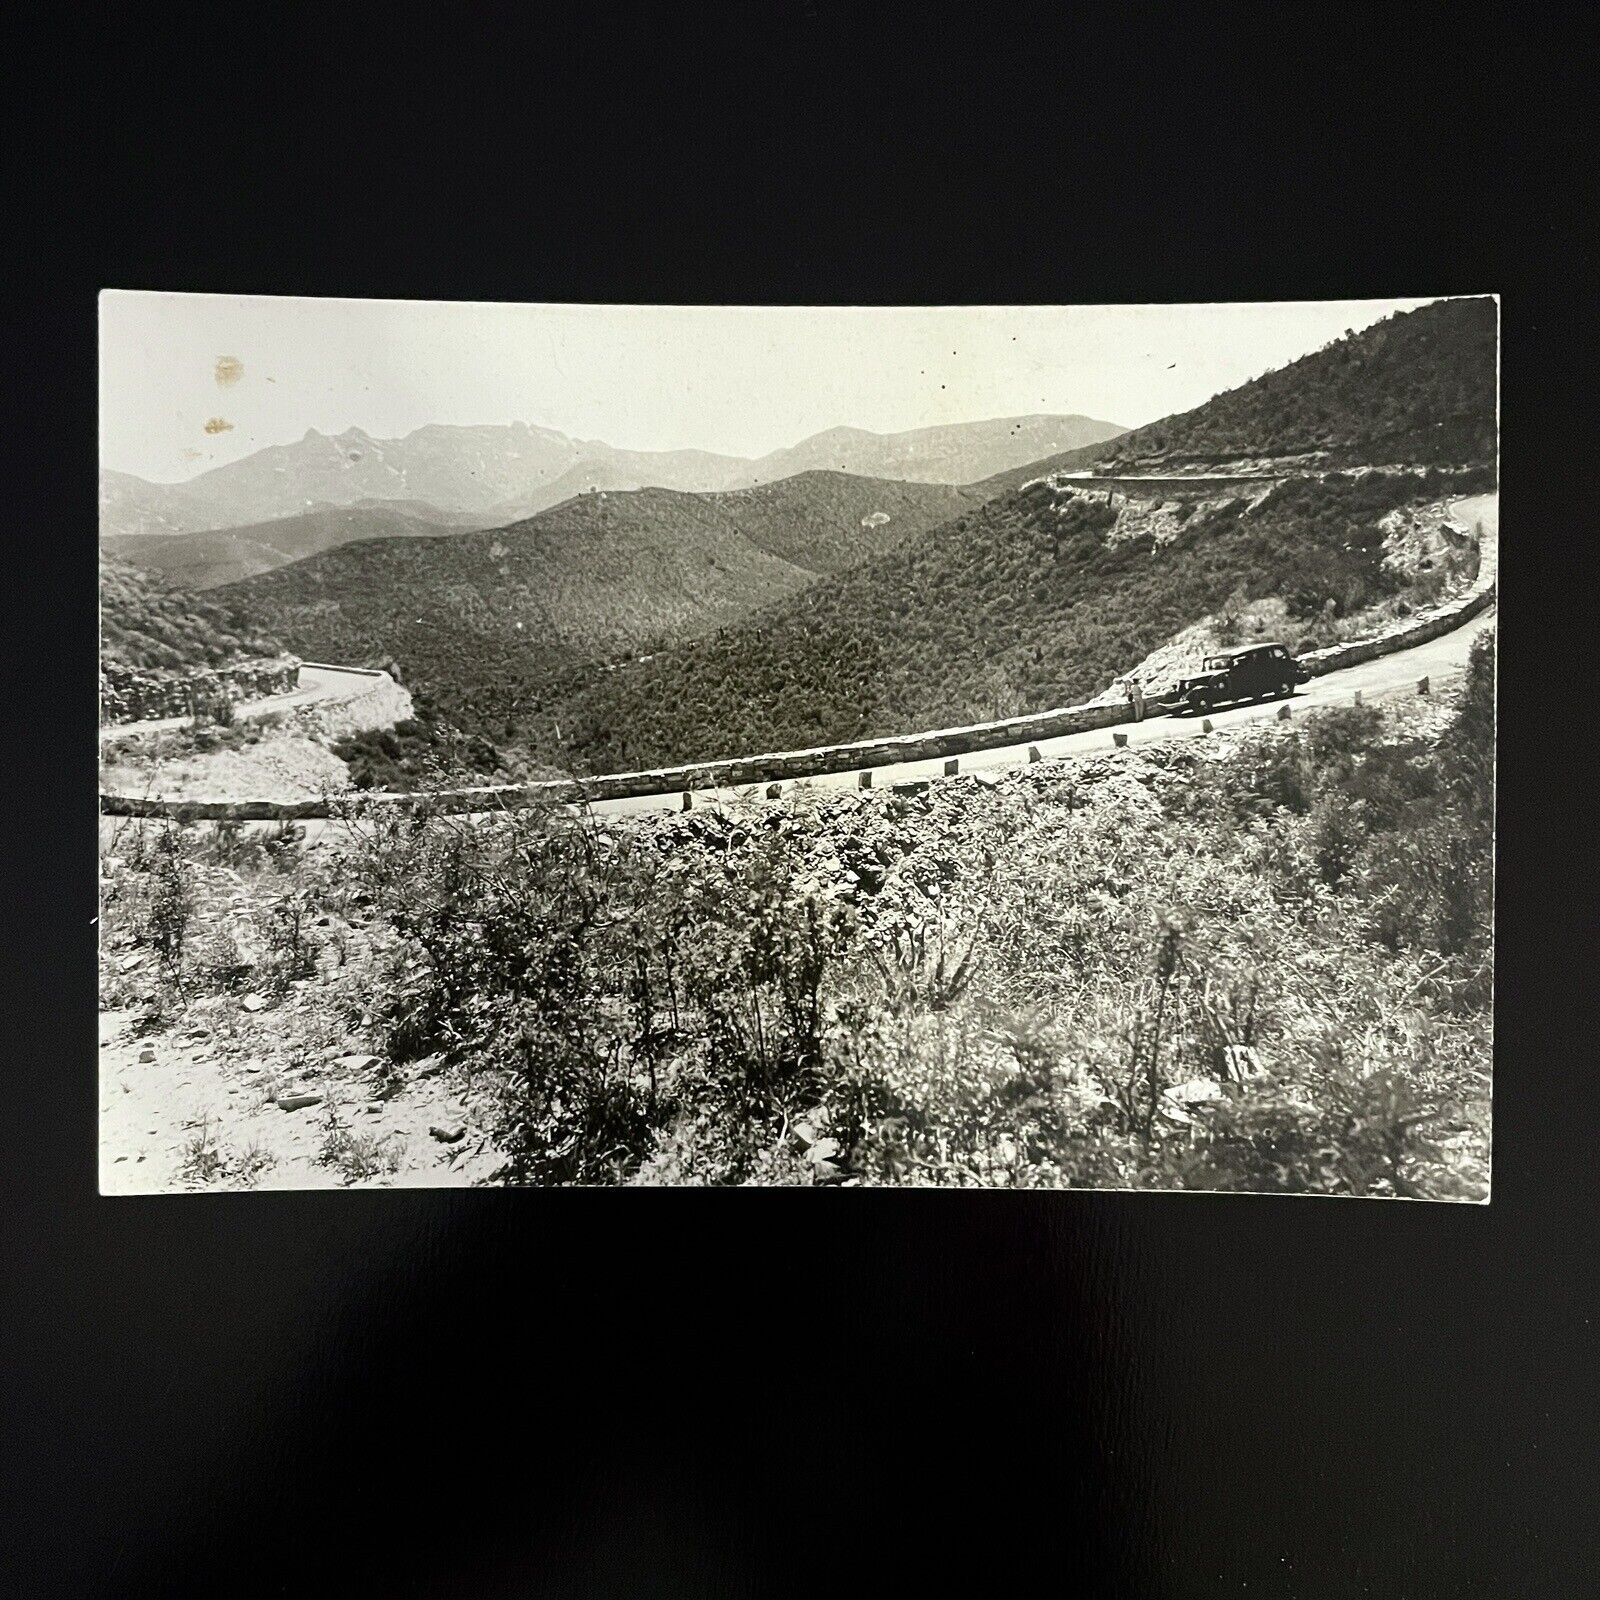 RPPC Carretera Mexico Laredo Highway Along Mountains Real Photo Postcard 1930s